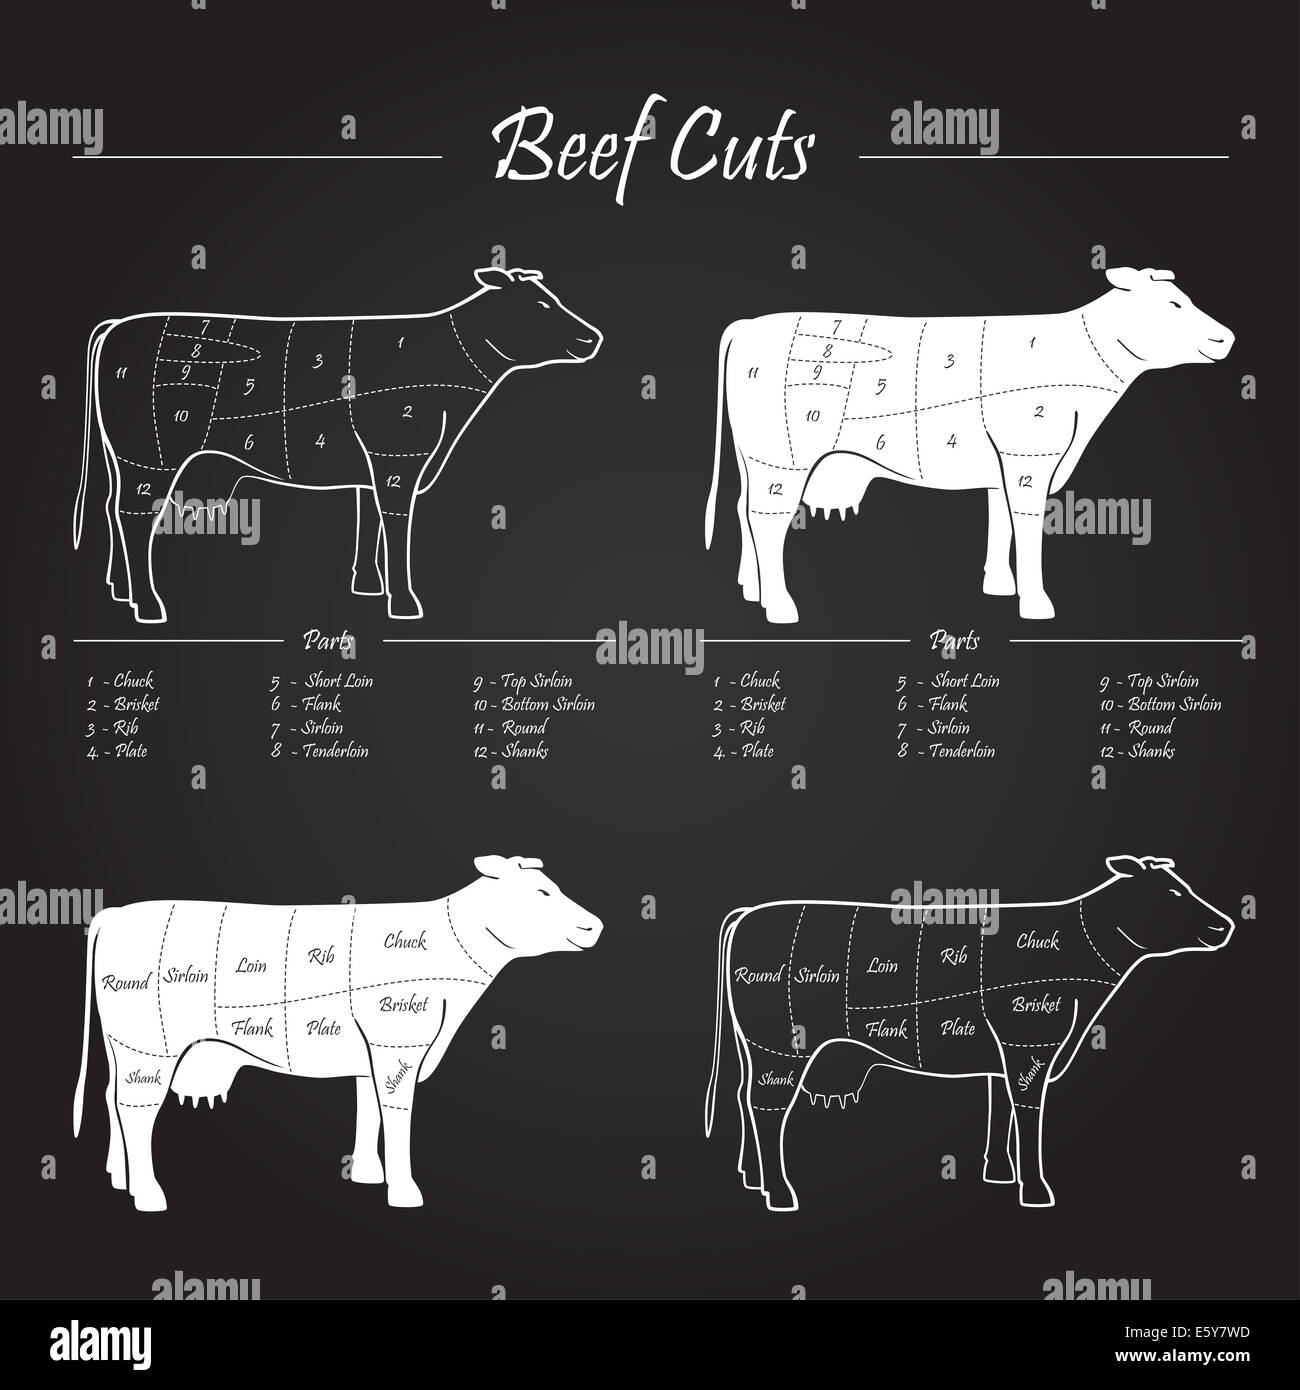 Meat cuts diagram -Fotos und -Bildmaterial in hoher Auflösung – Alamy